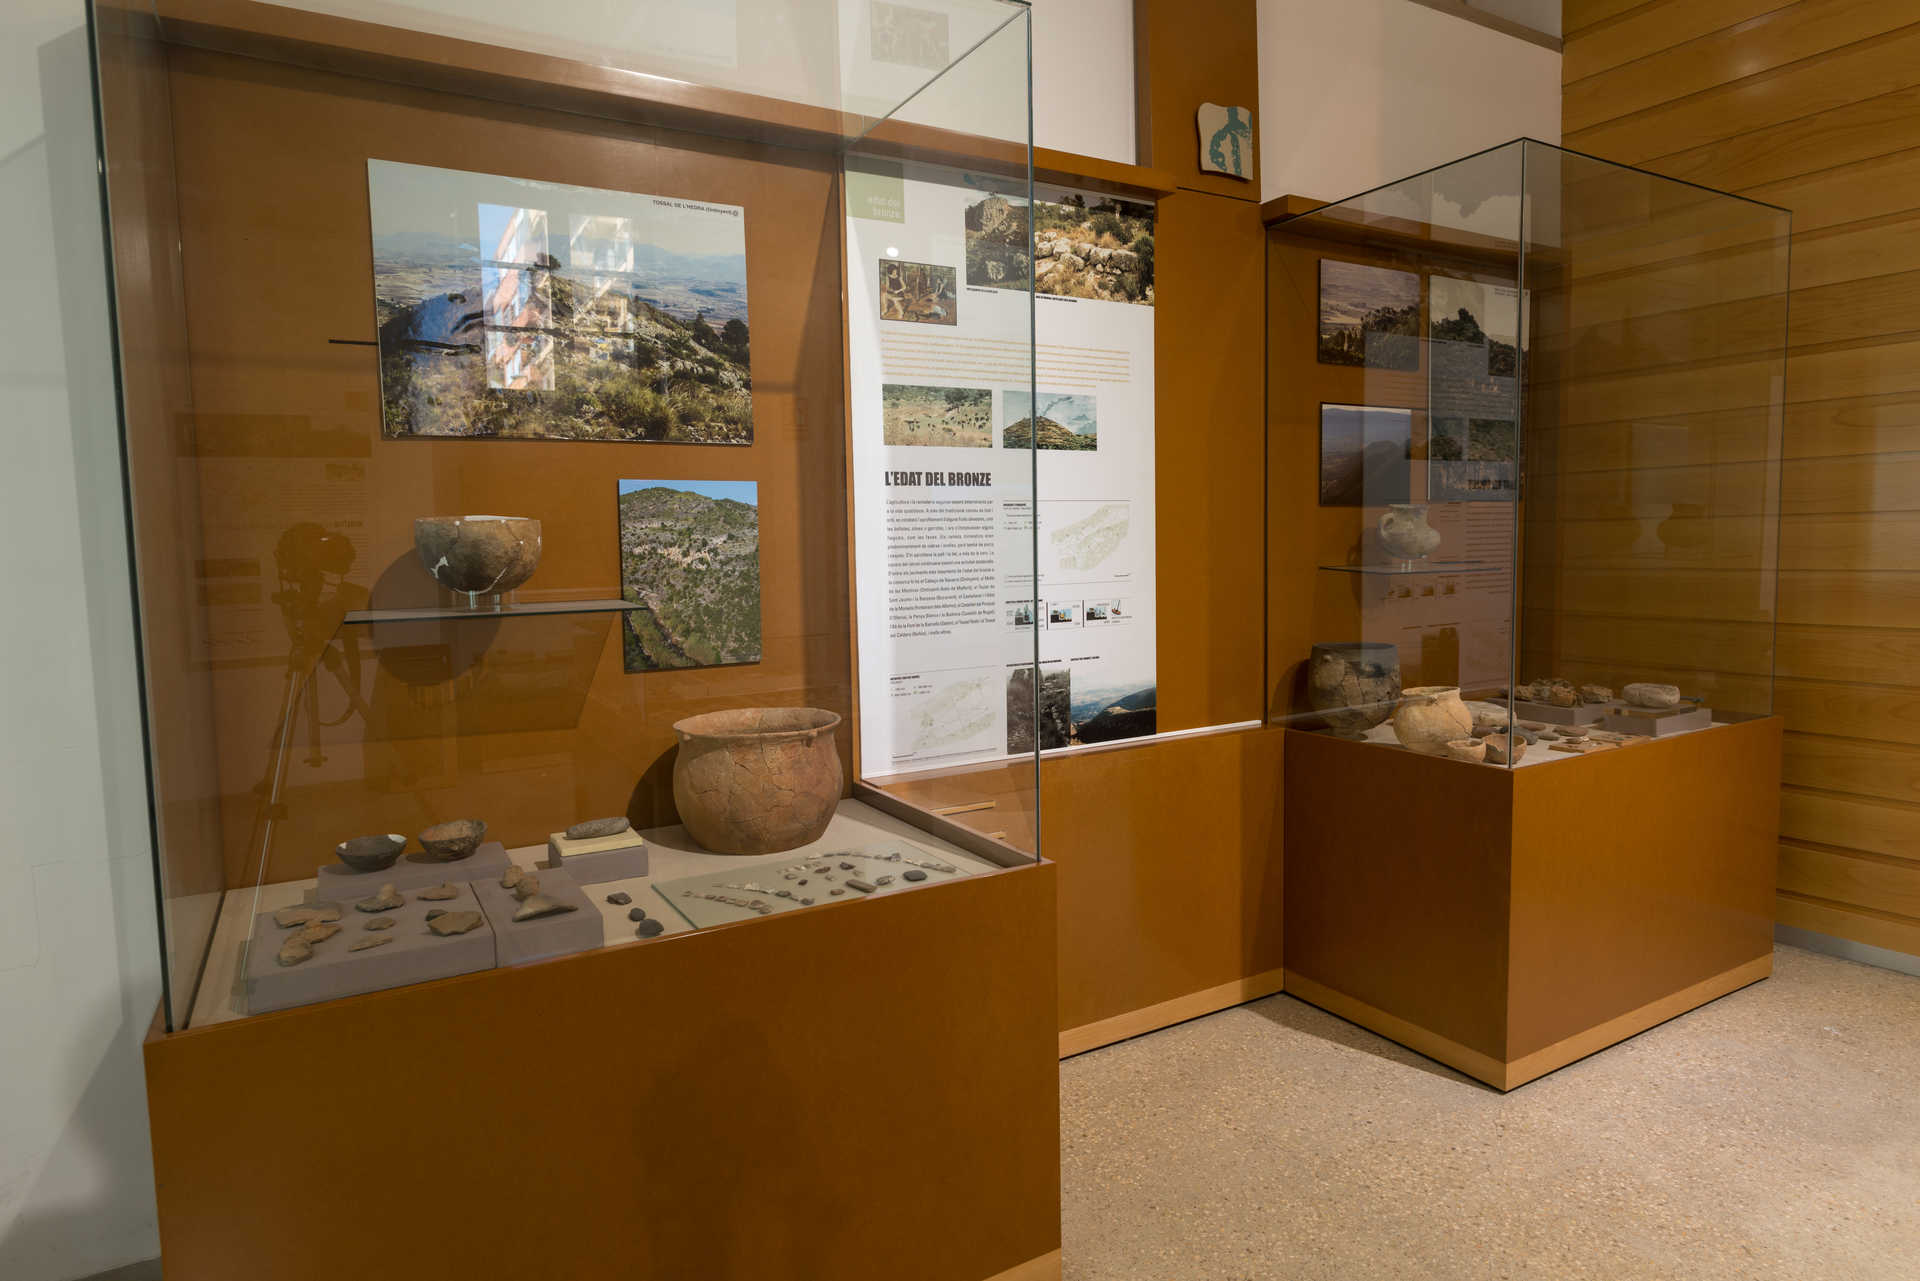 Museo arqueológico de Ontinyent i La Vall d'Albaida (MAOVA)